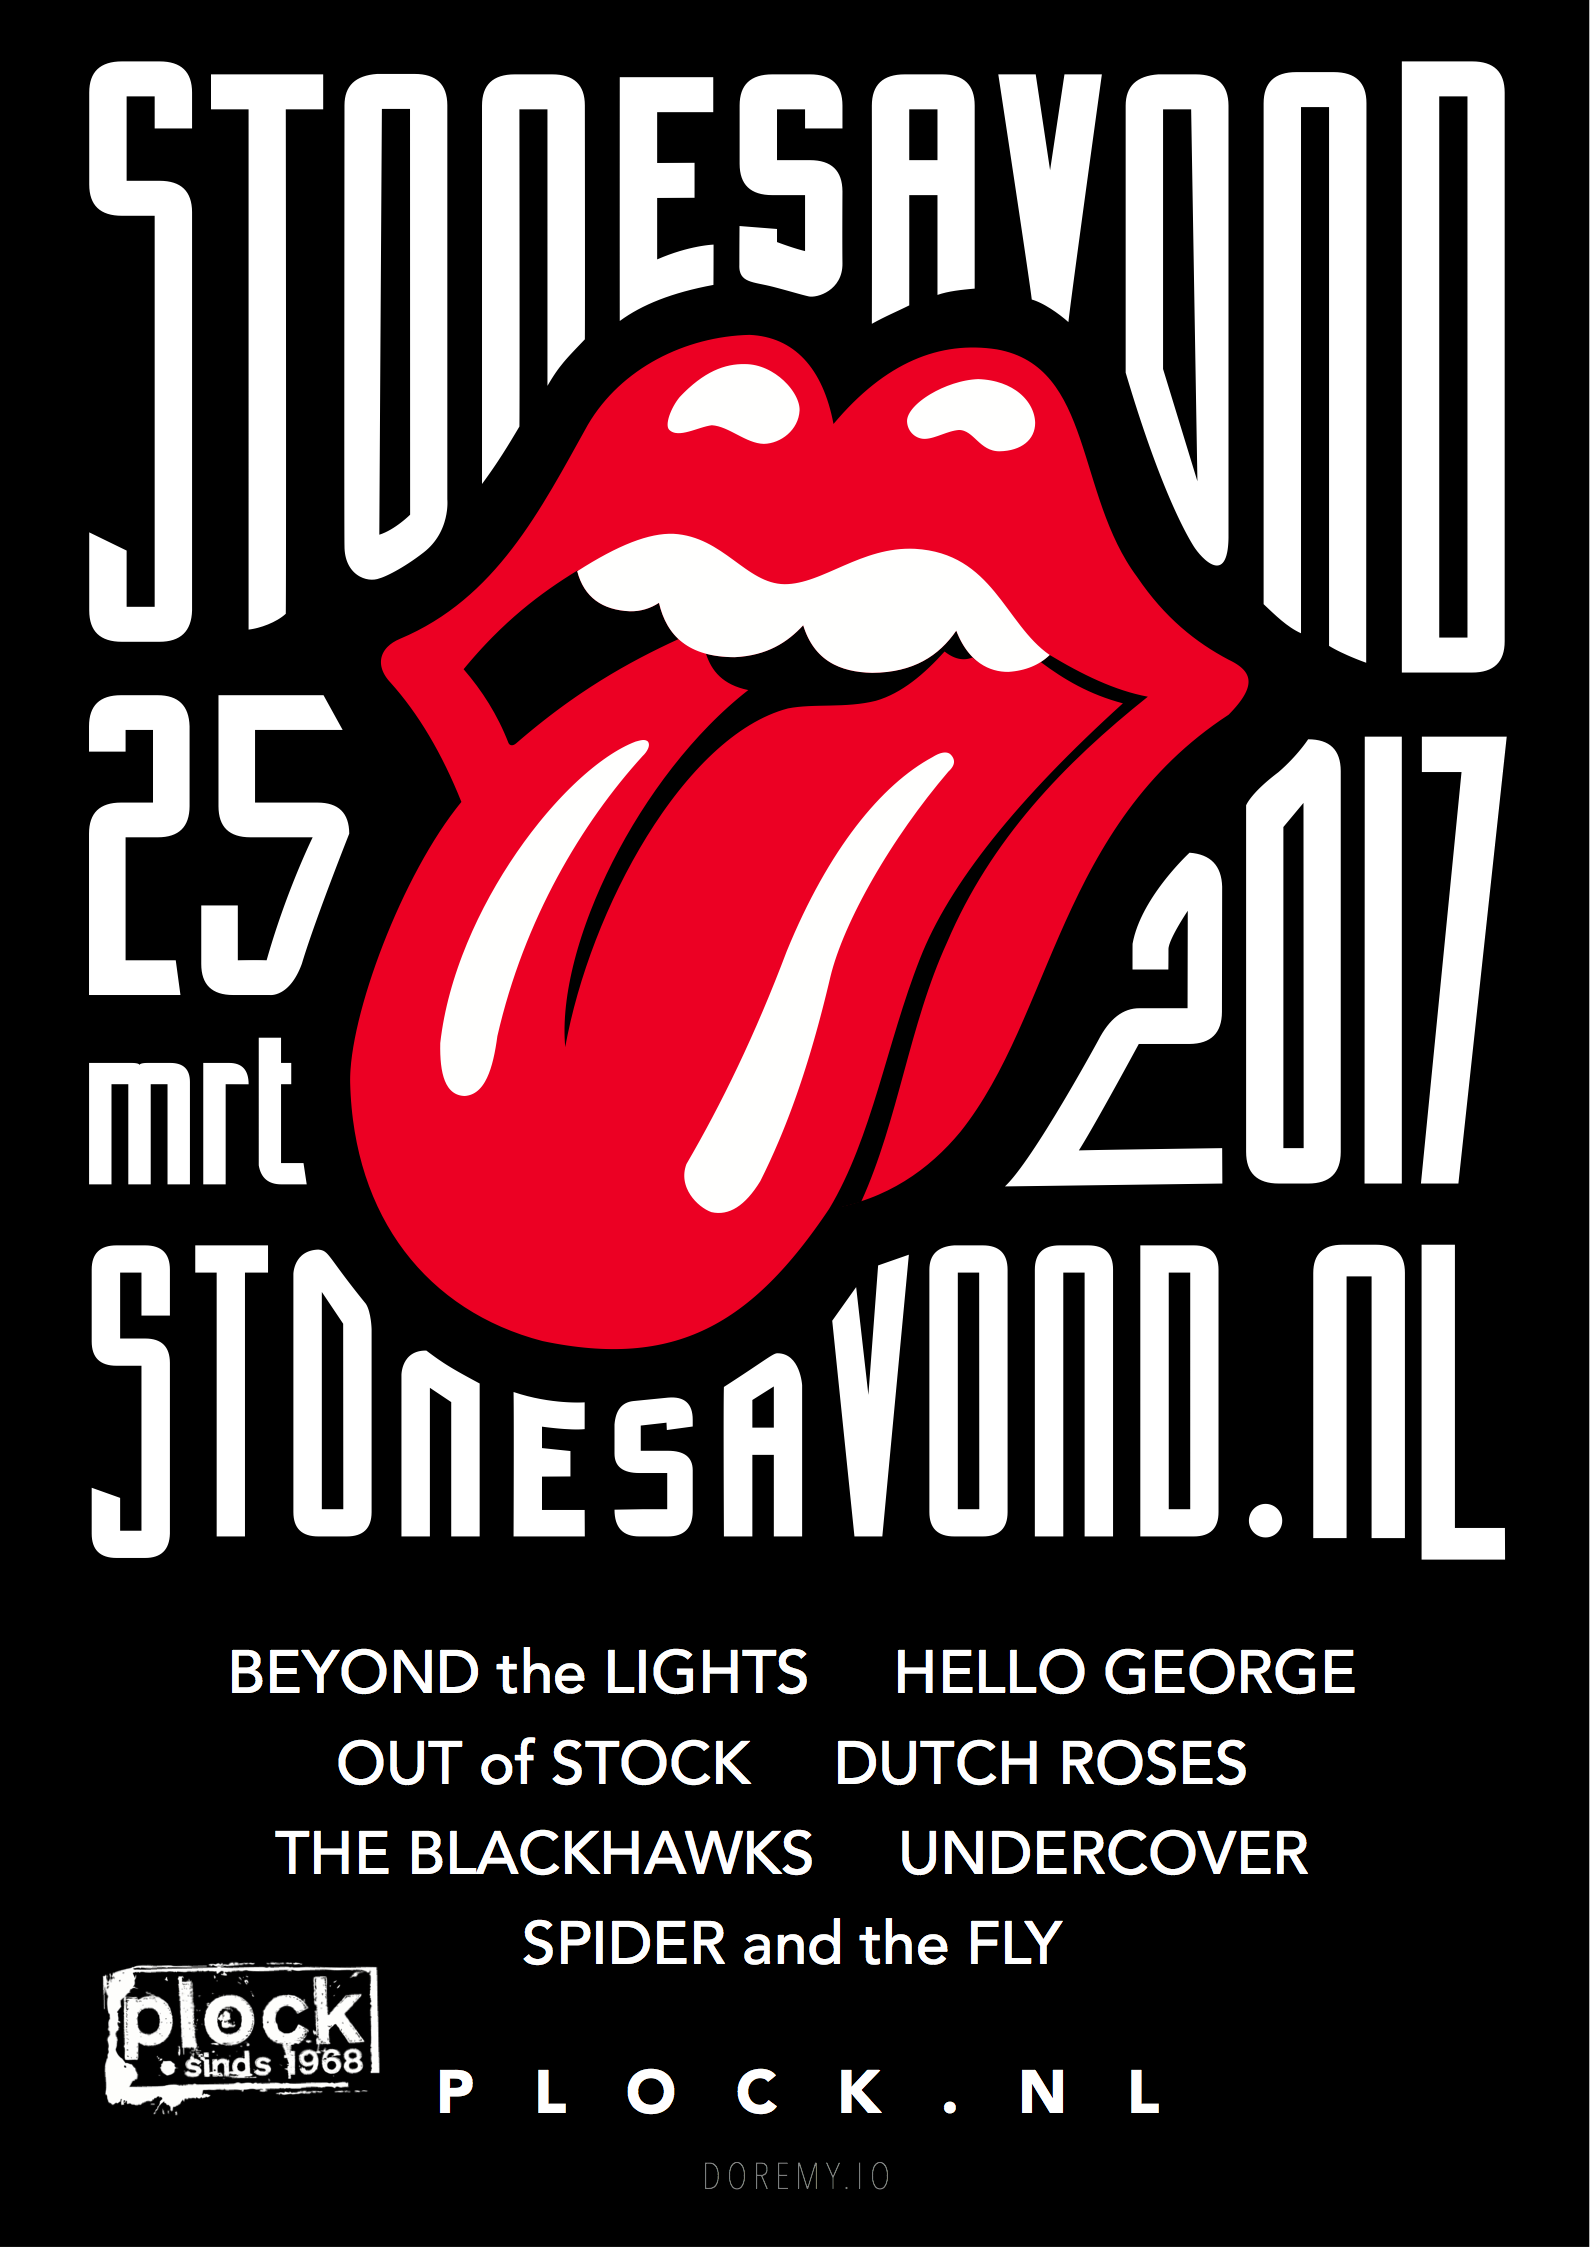 Stonesavond Poster '17 